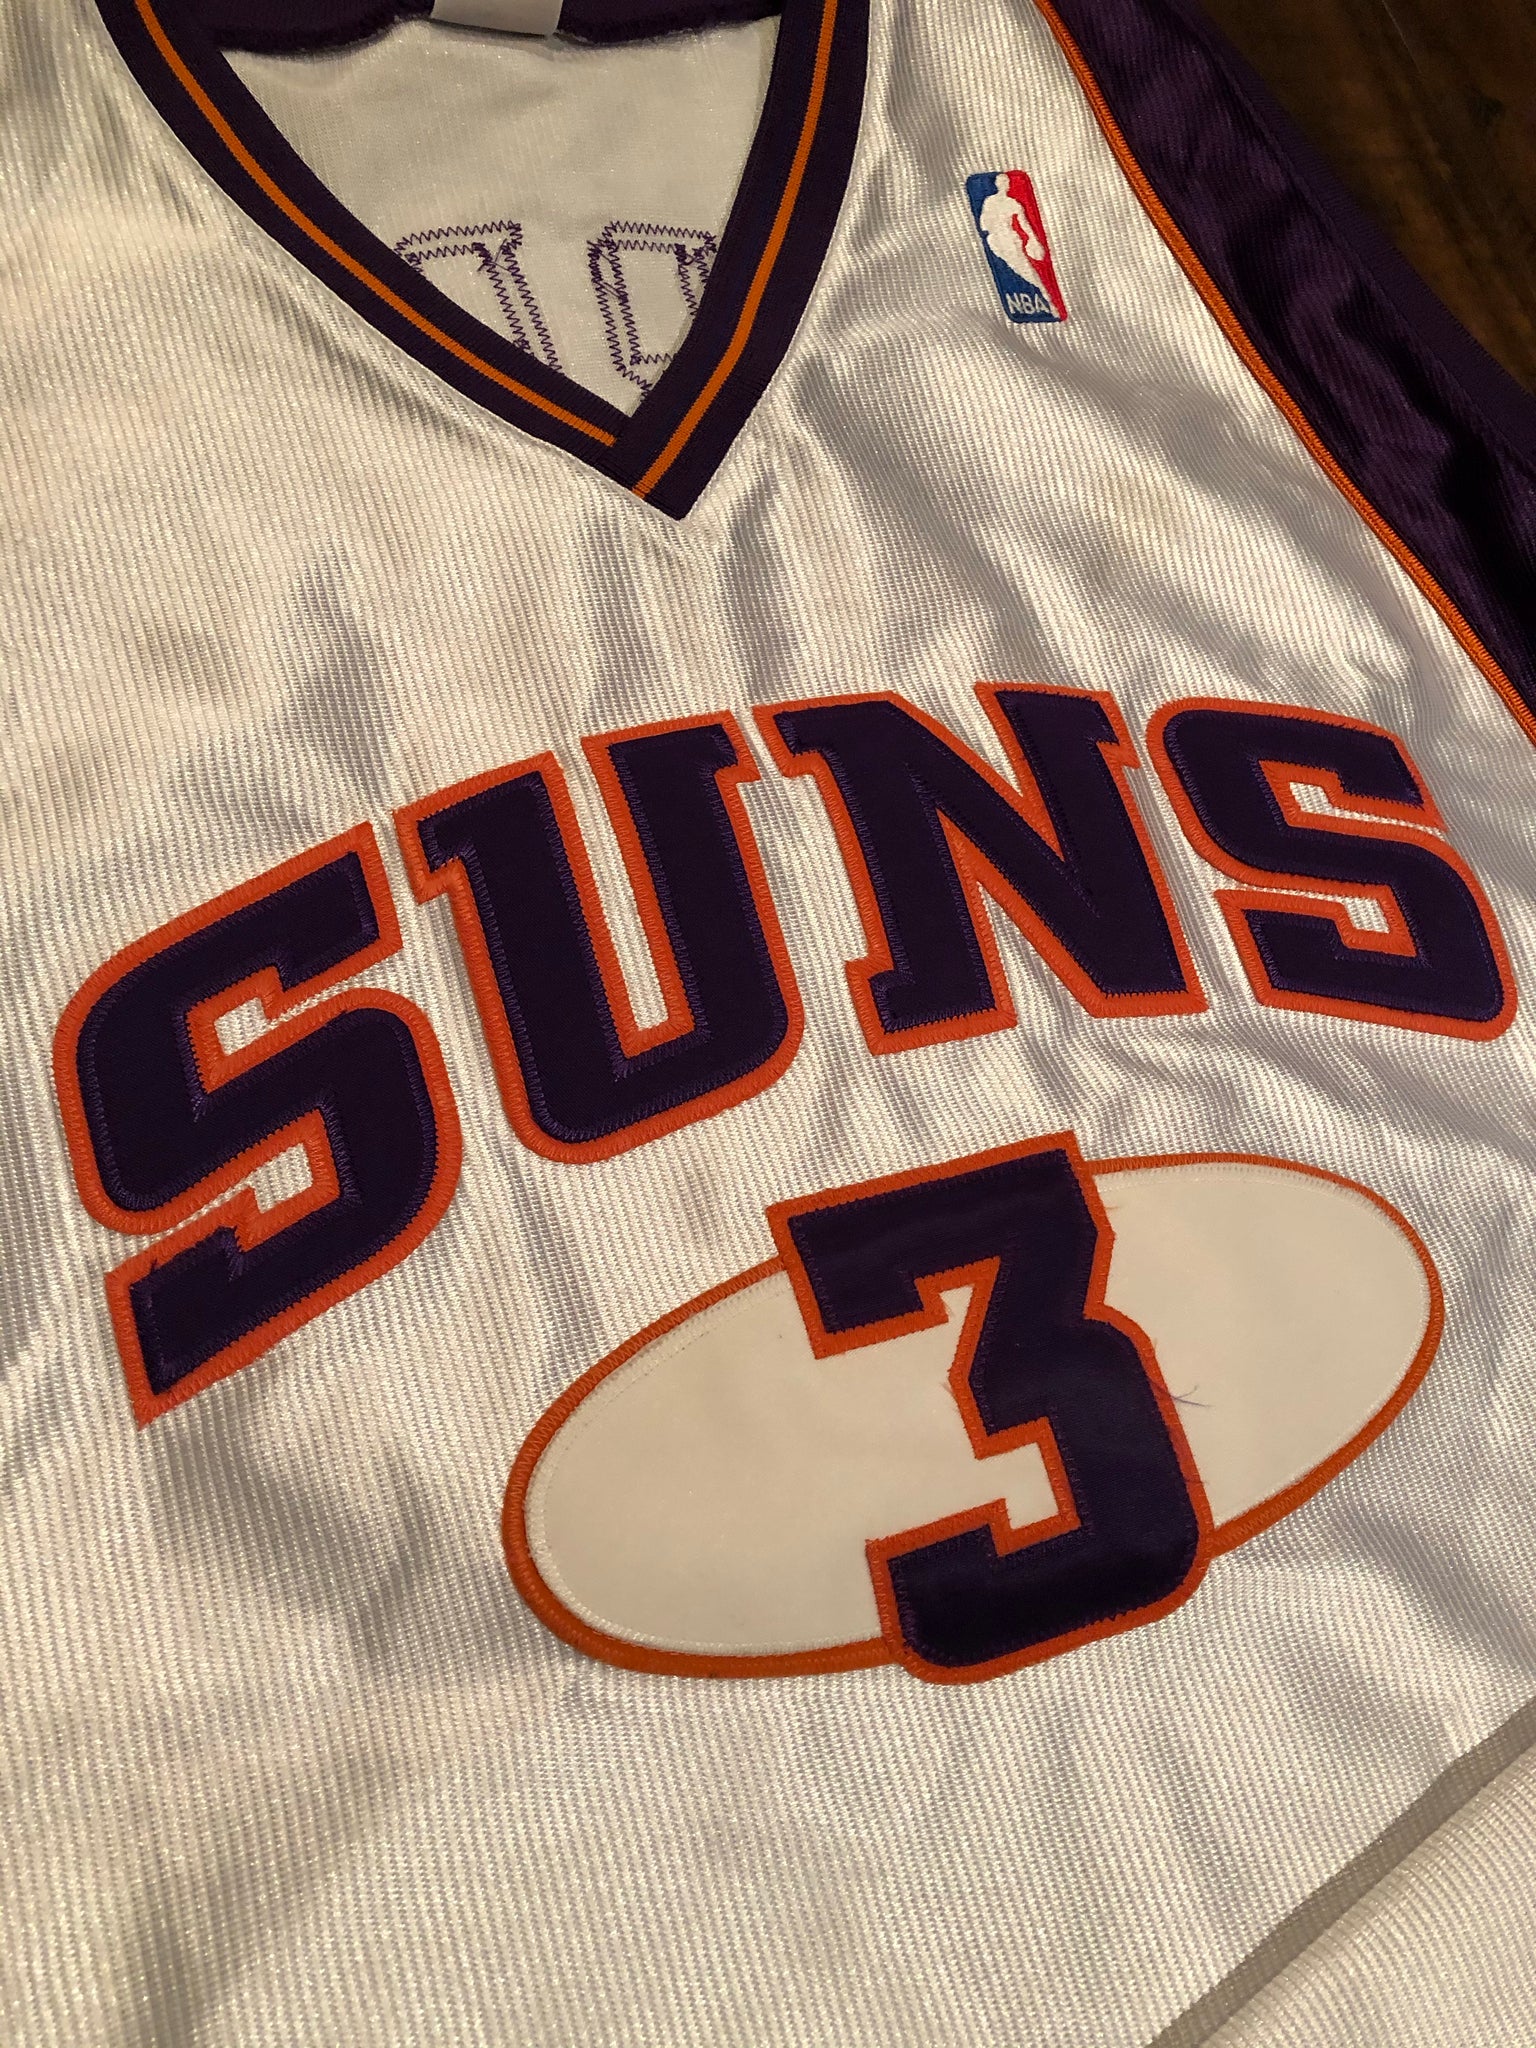 Phoenix Suns Stephon Marbury Champion Authentic Jersey 56 3XL – Select  Vintage BK